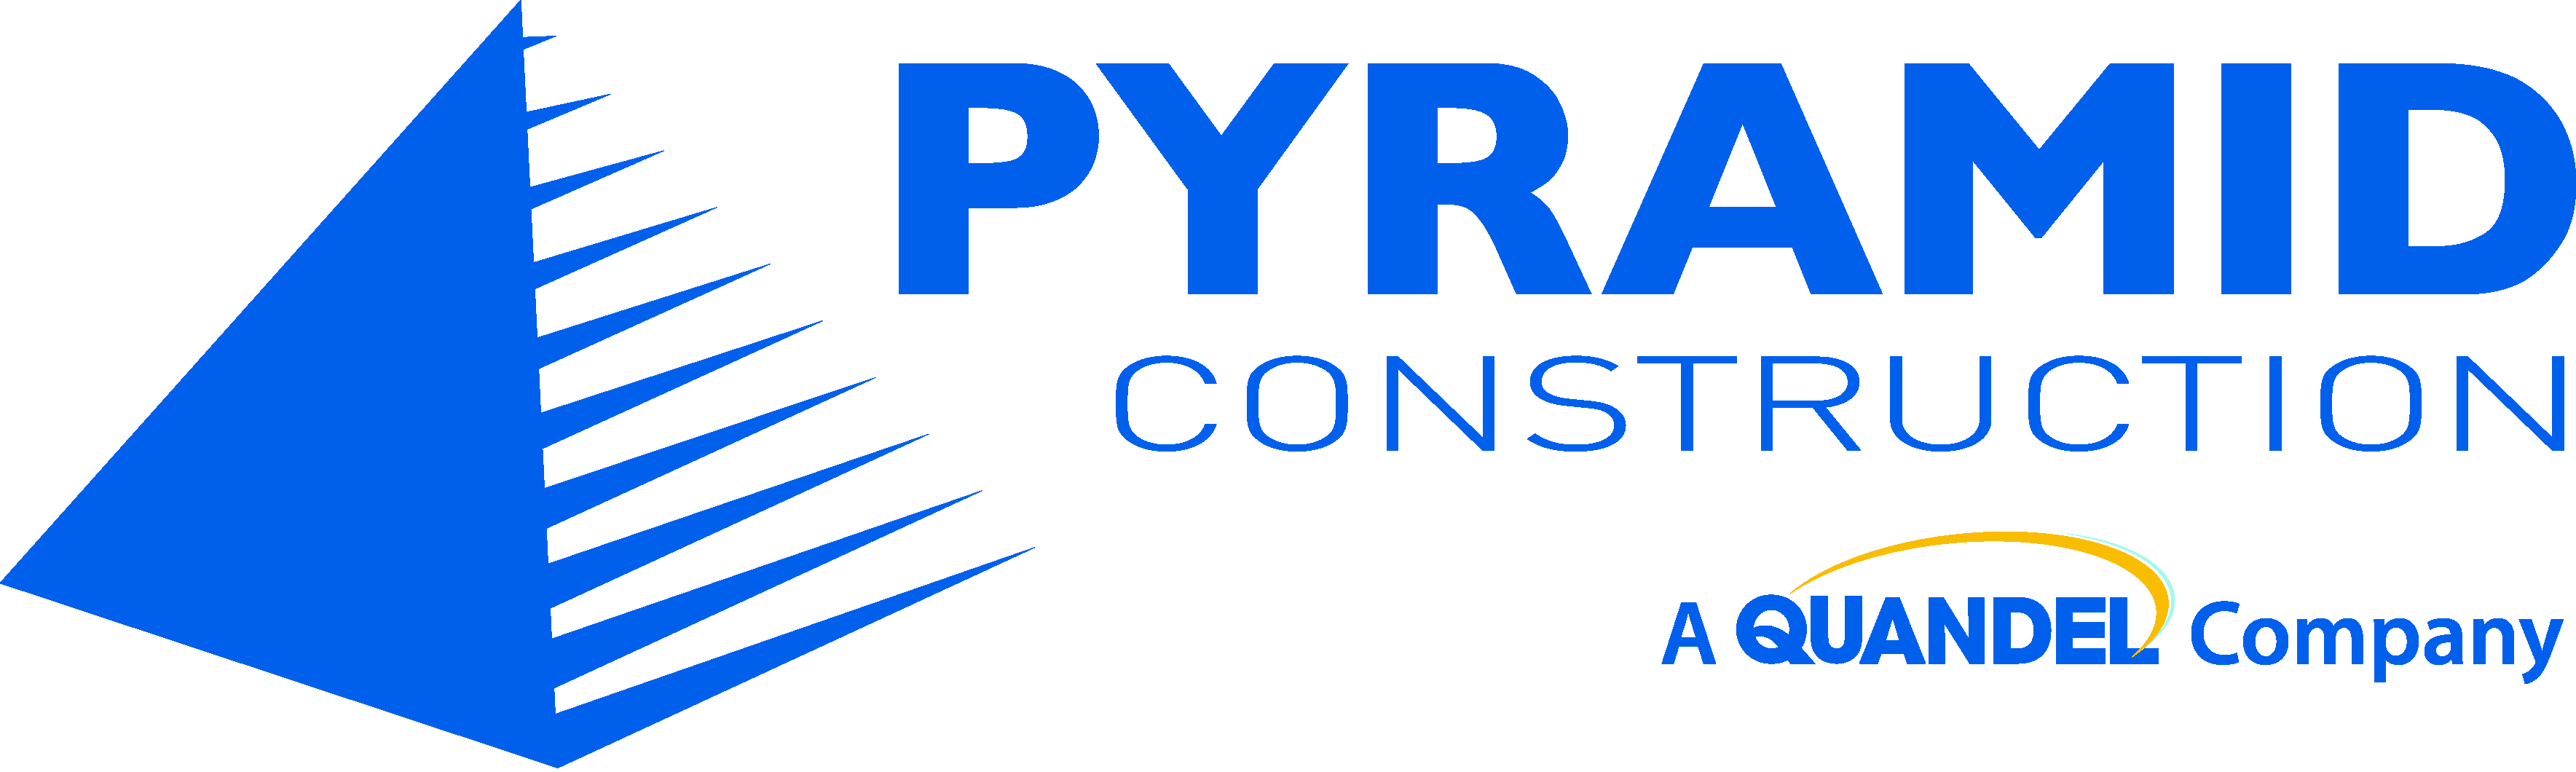 businessSPOTLIGHT: Pyramid Construction Services, Inc. - West Shore ...